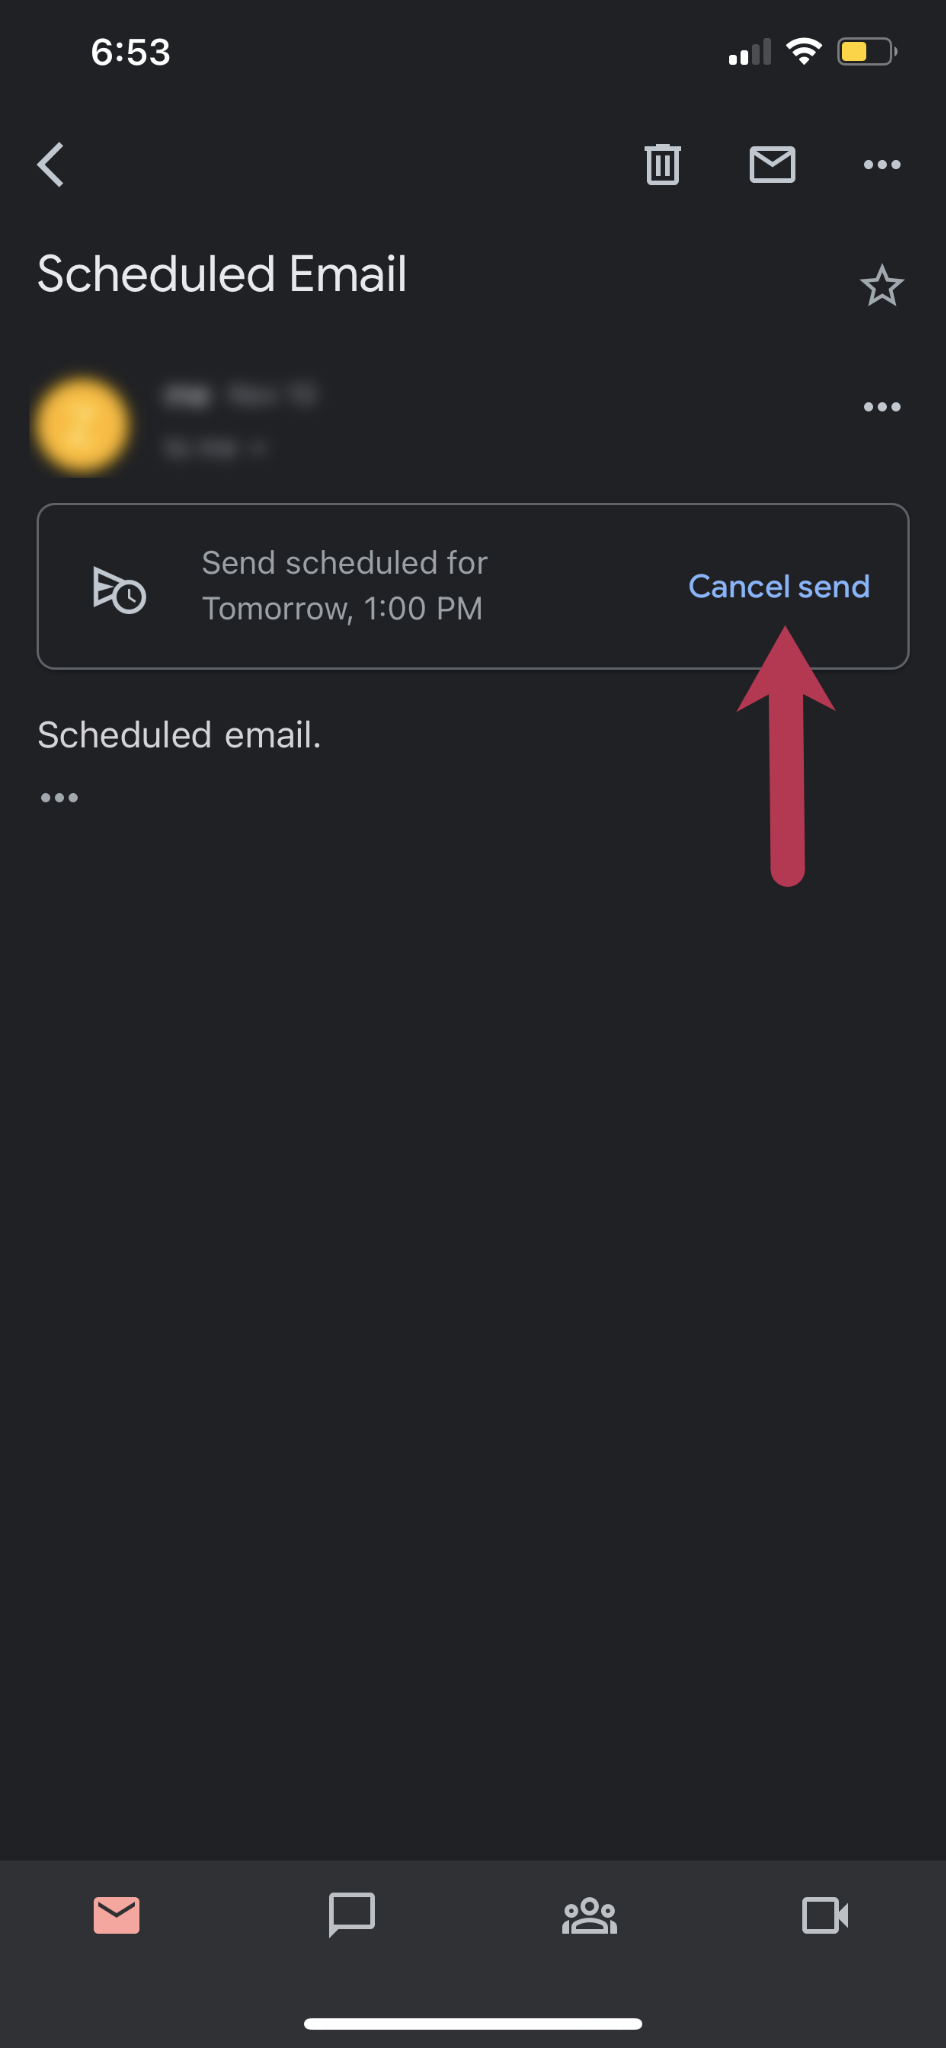 cancel-send-option-on-mobile-Gmail